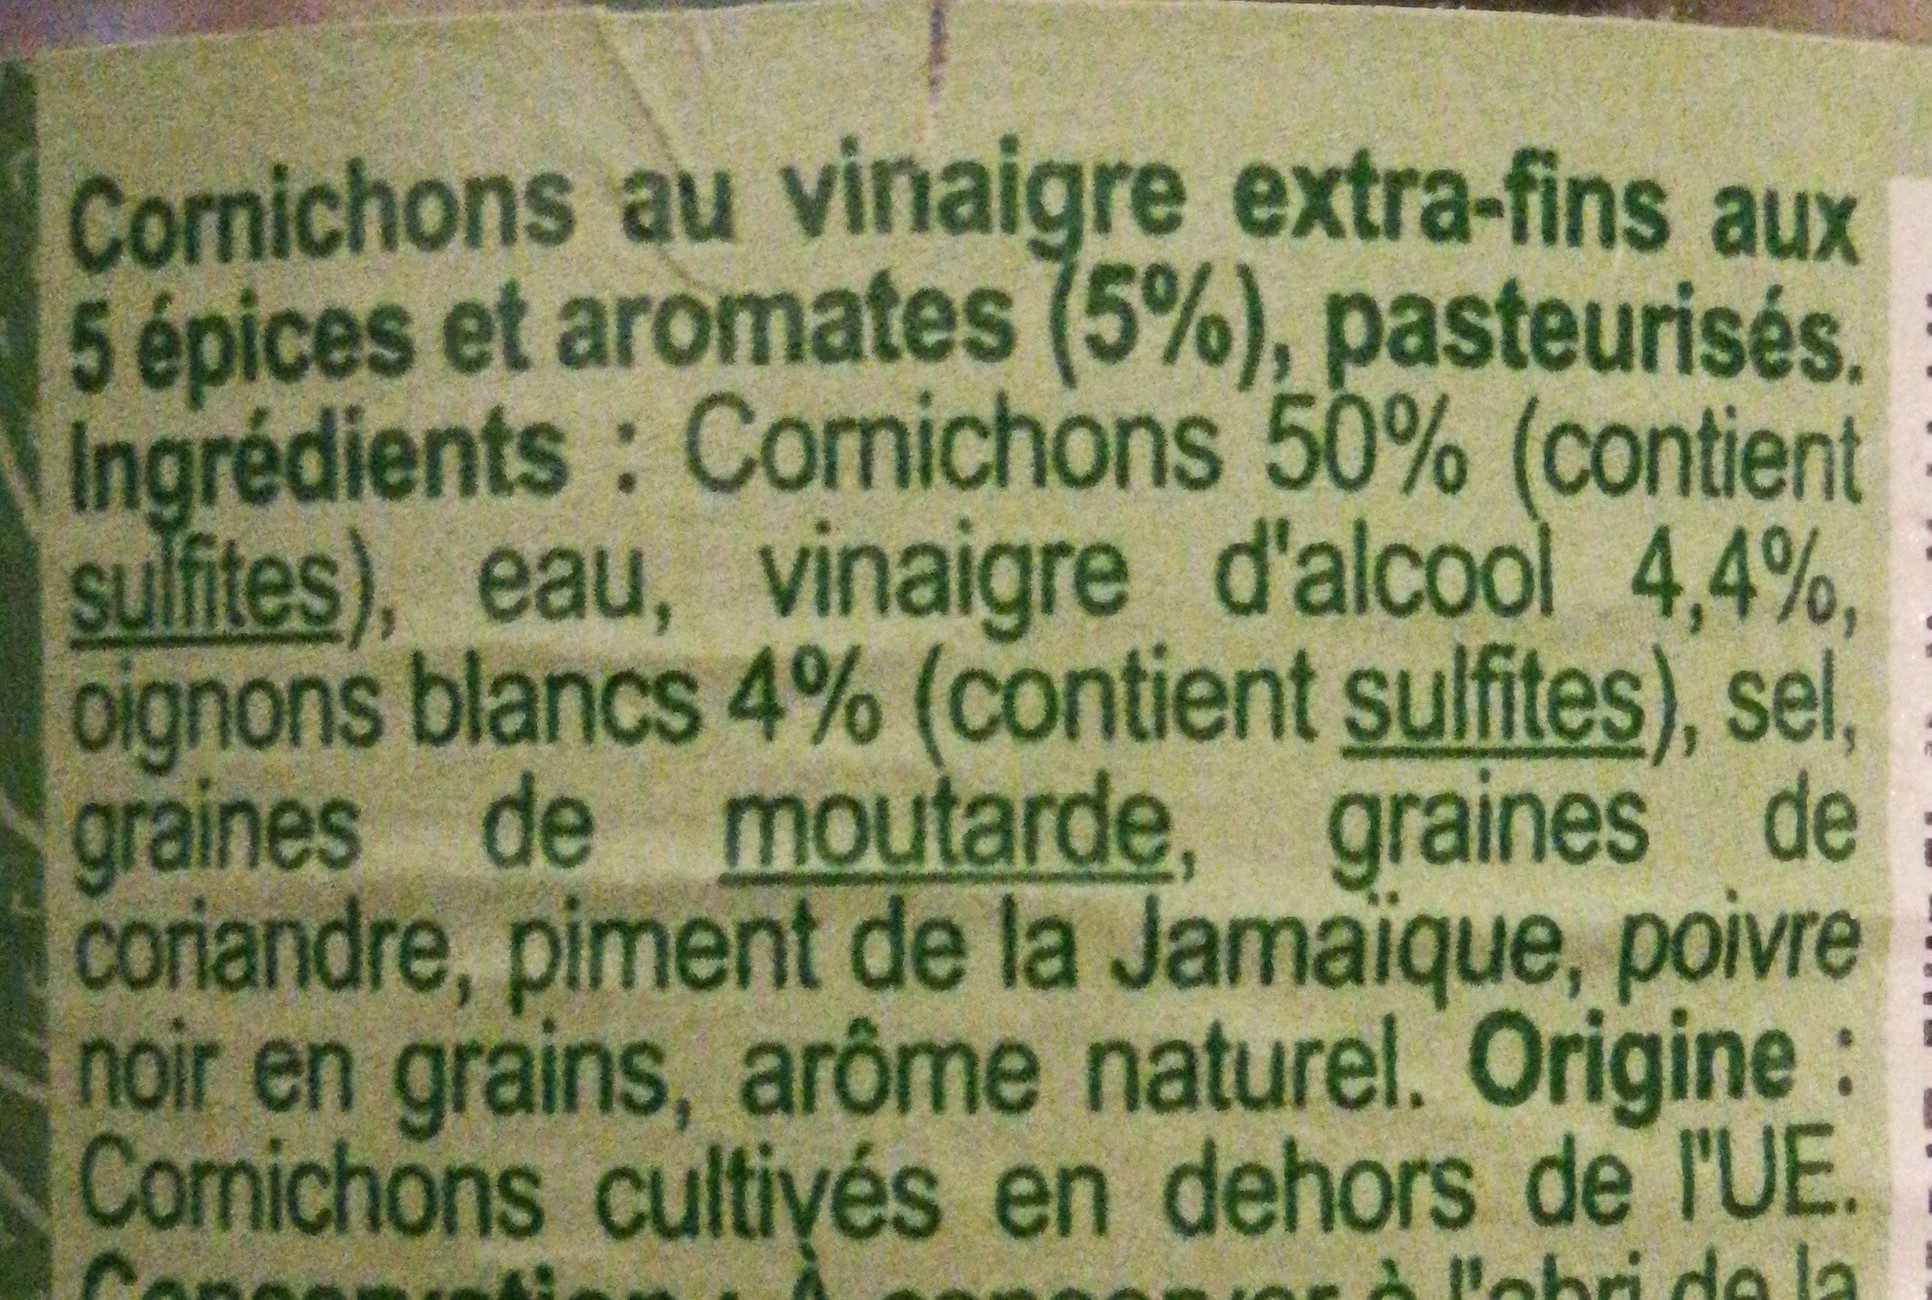 Cornichons Extra-fins - Ingredients - fr